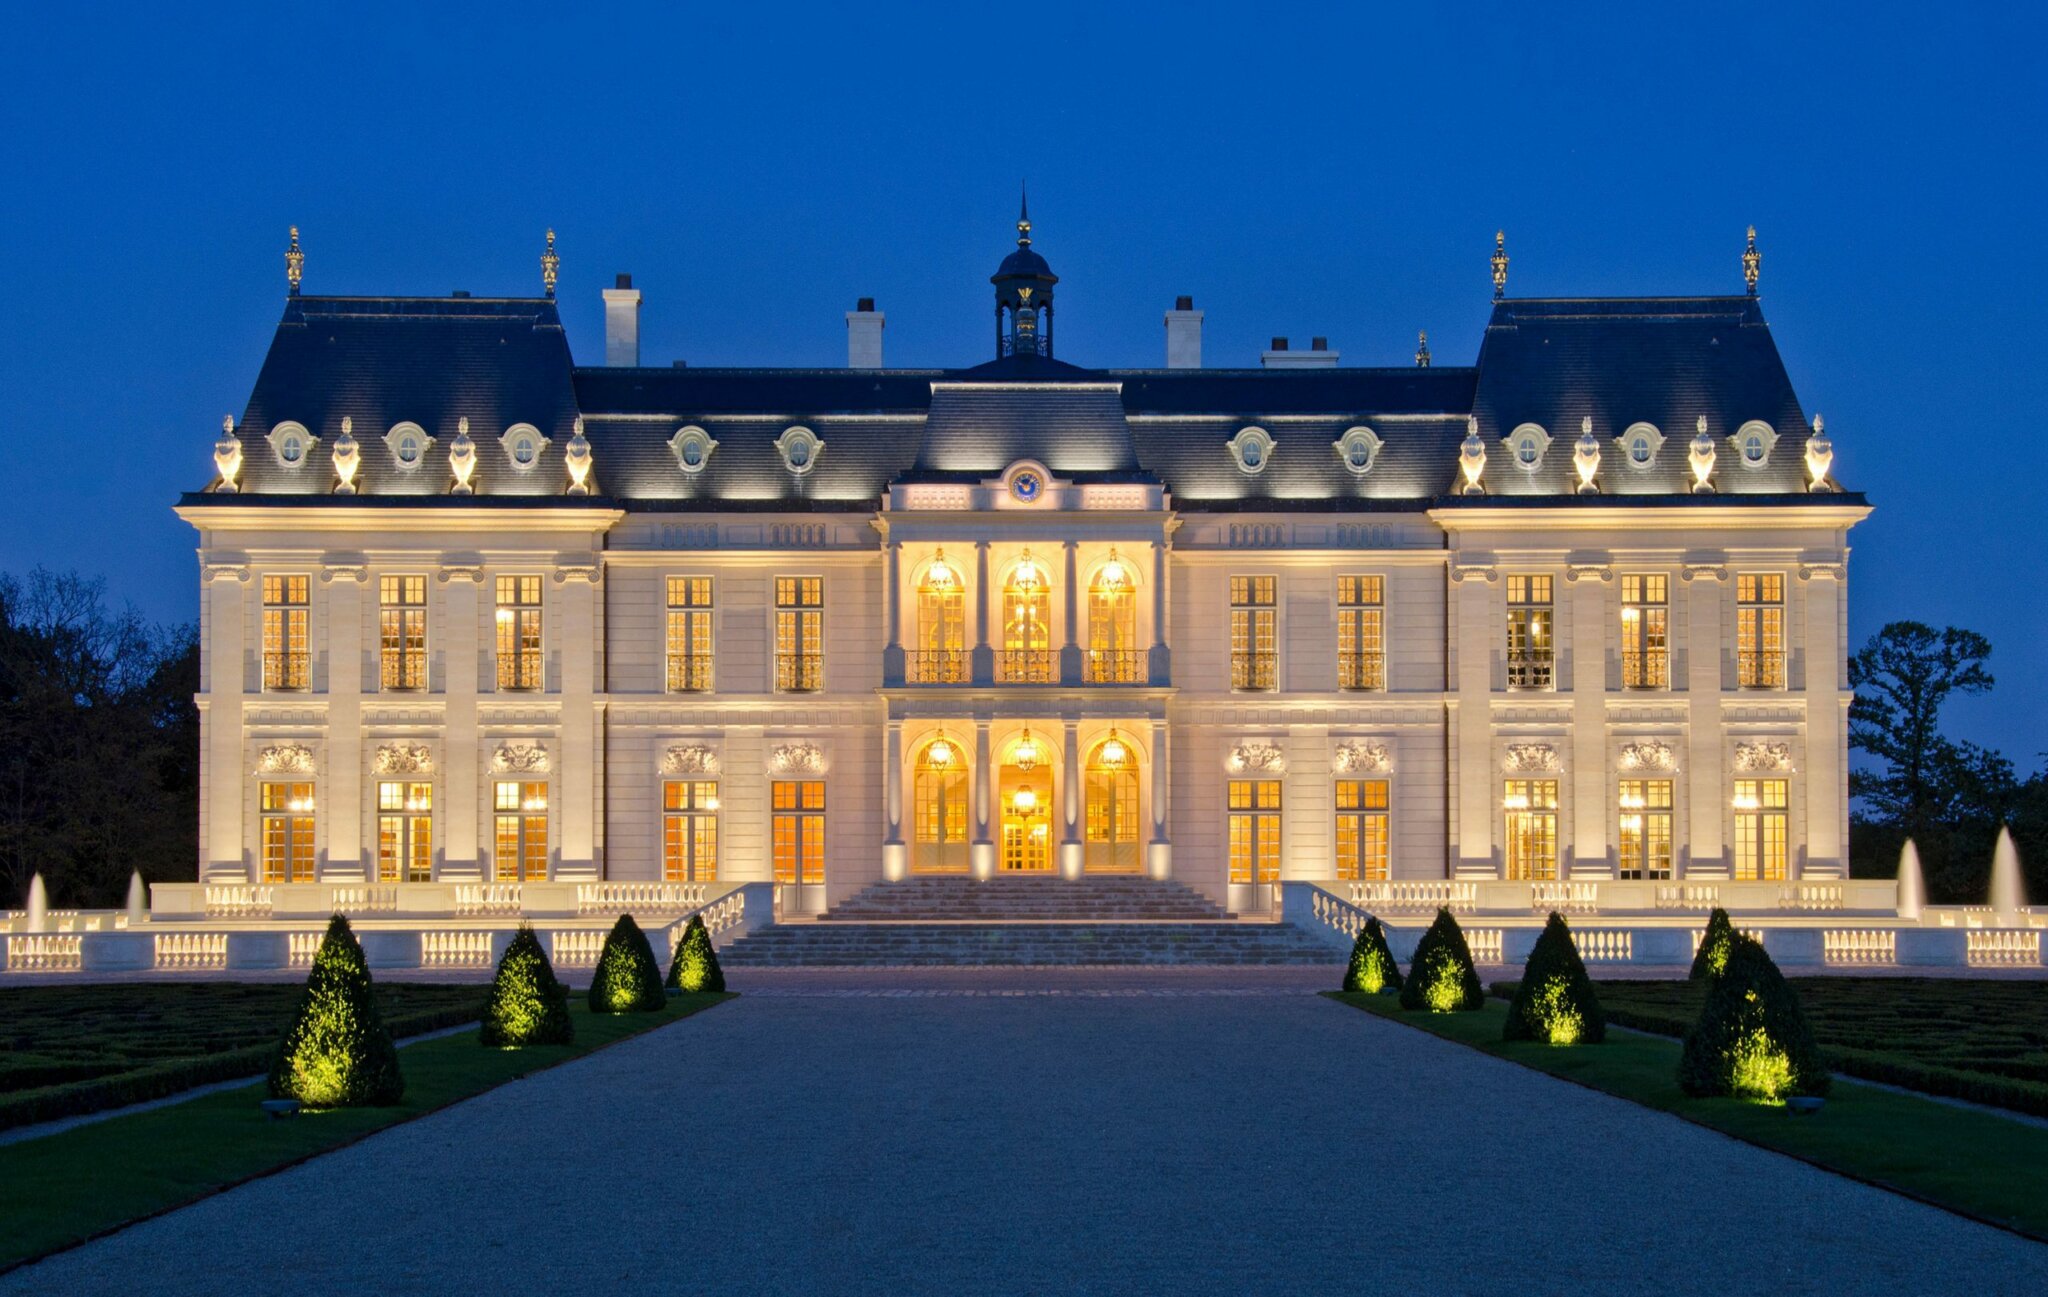 COGEMAD Chateau Louis XIV Scaled 2048x1297 